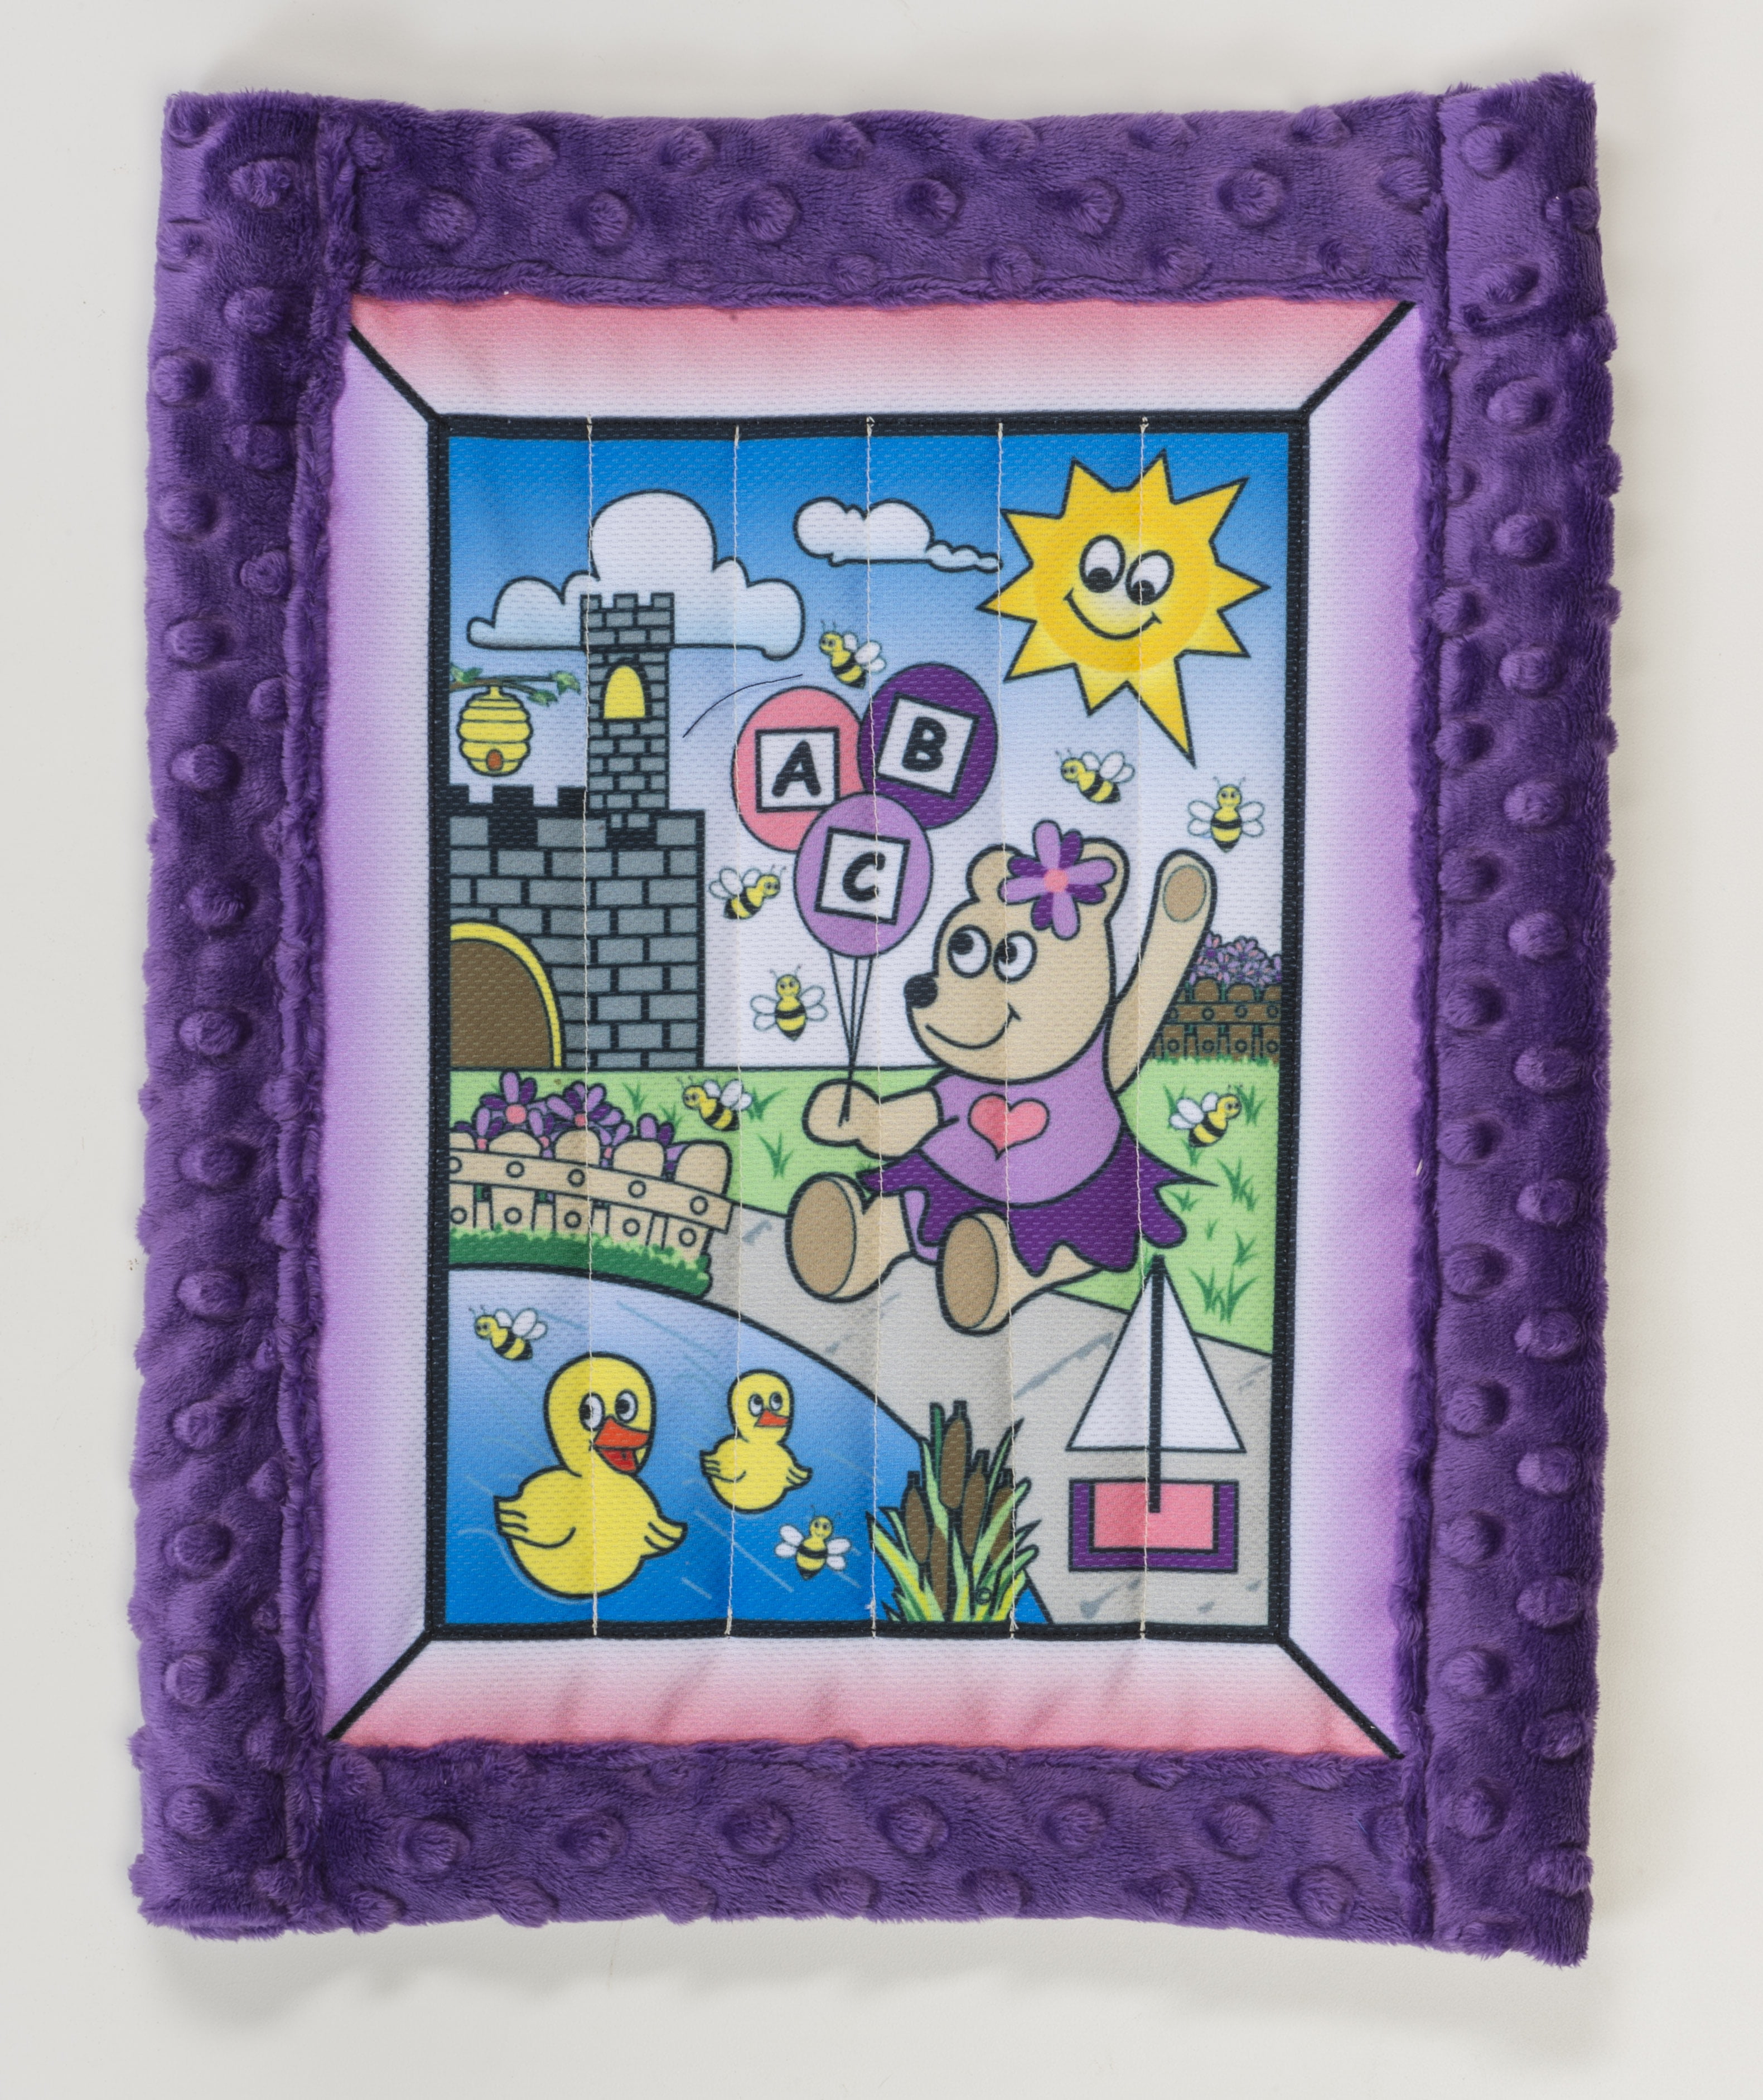 Baby quilt kit, Girl Bear w/ purple minkee back 25